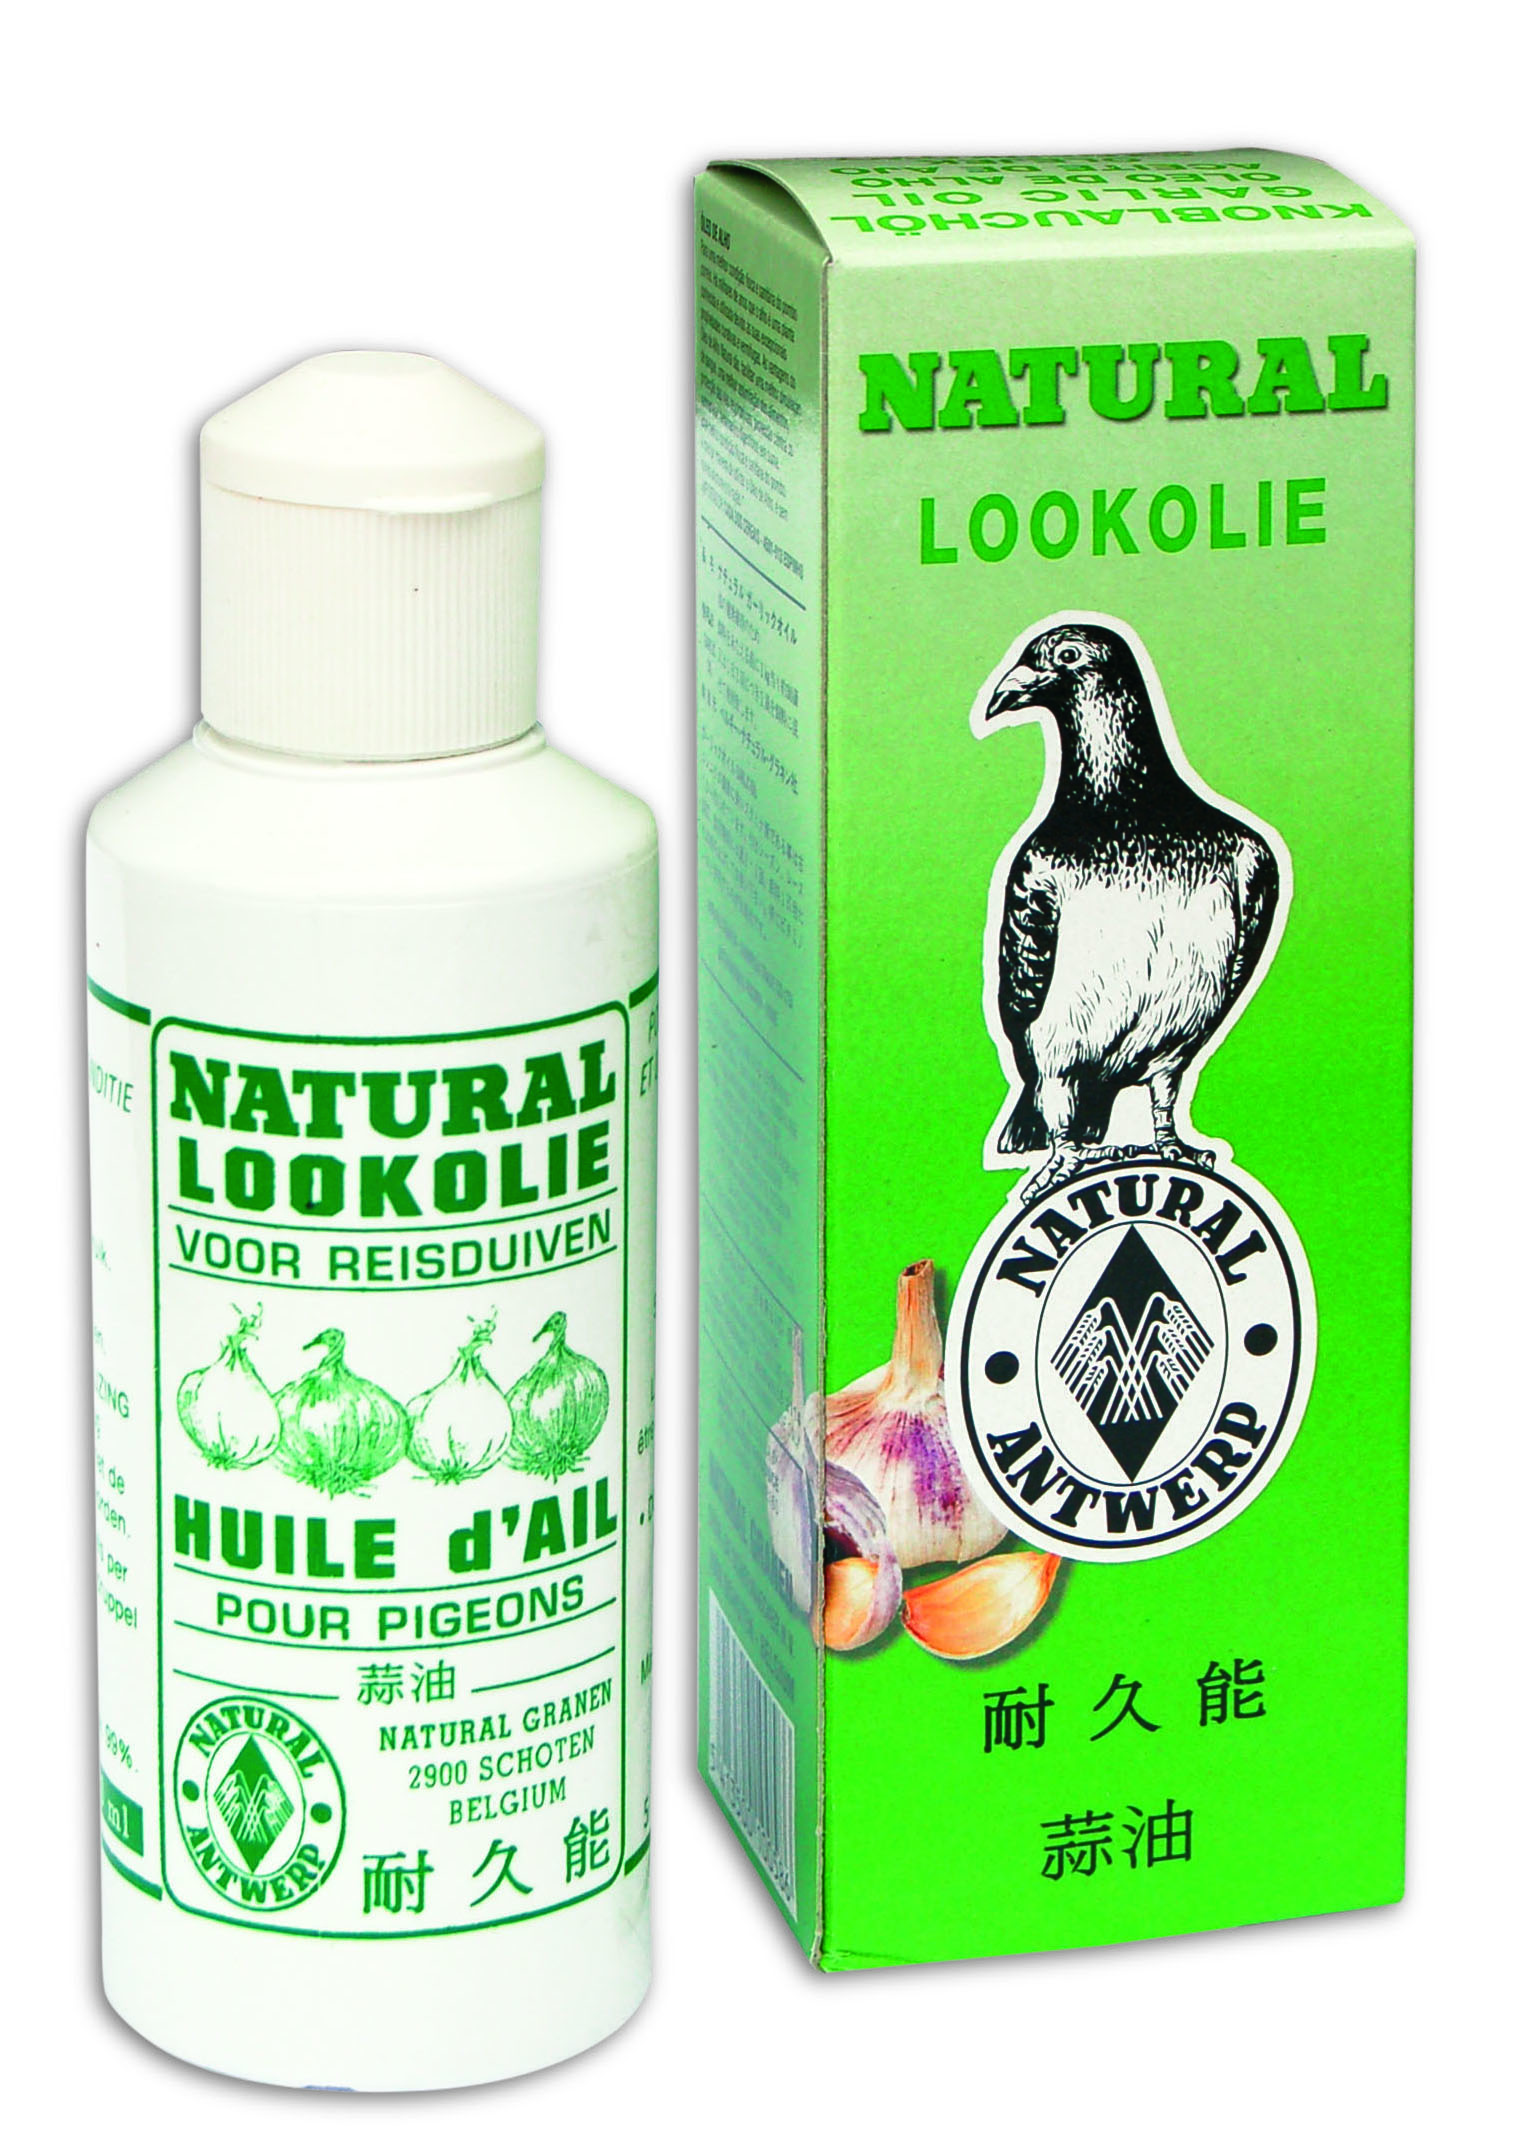 Natural lookolie - <Product shot>